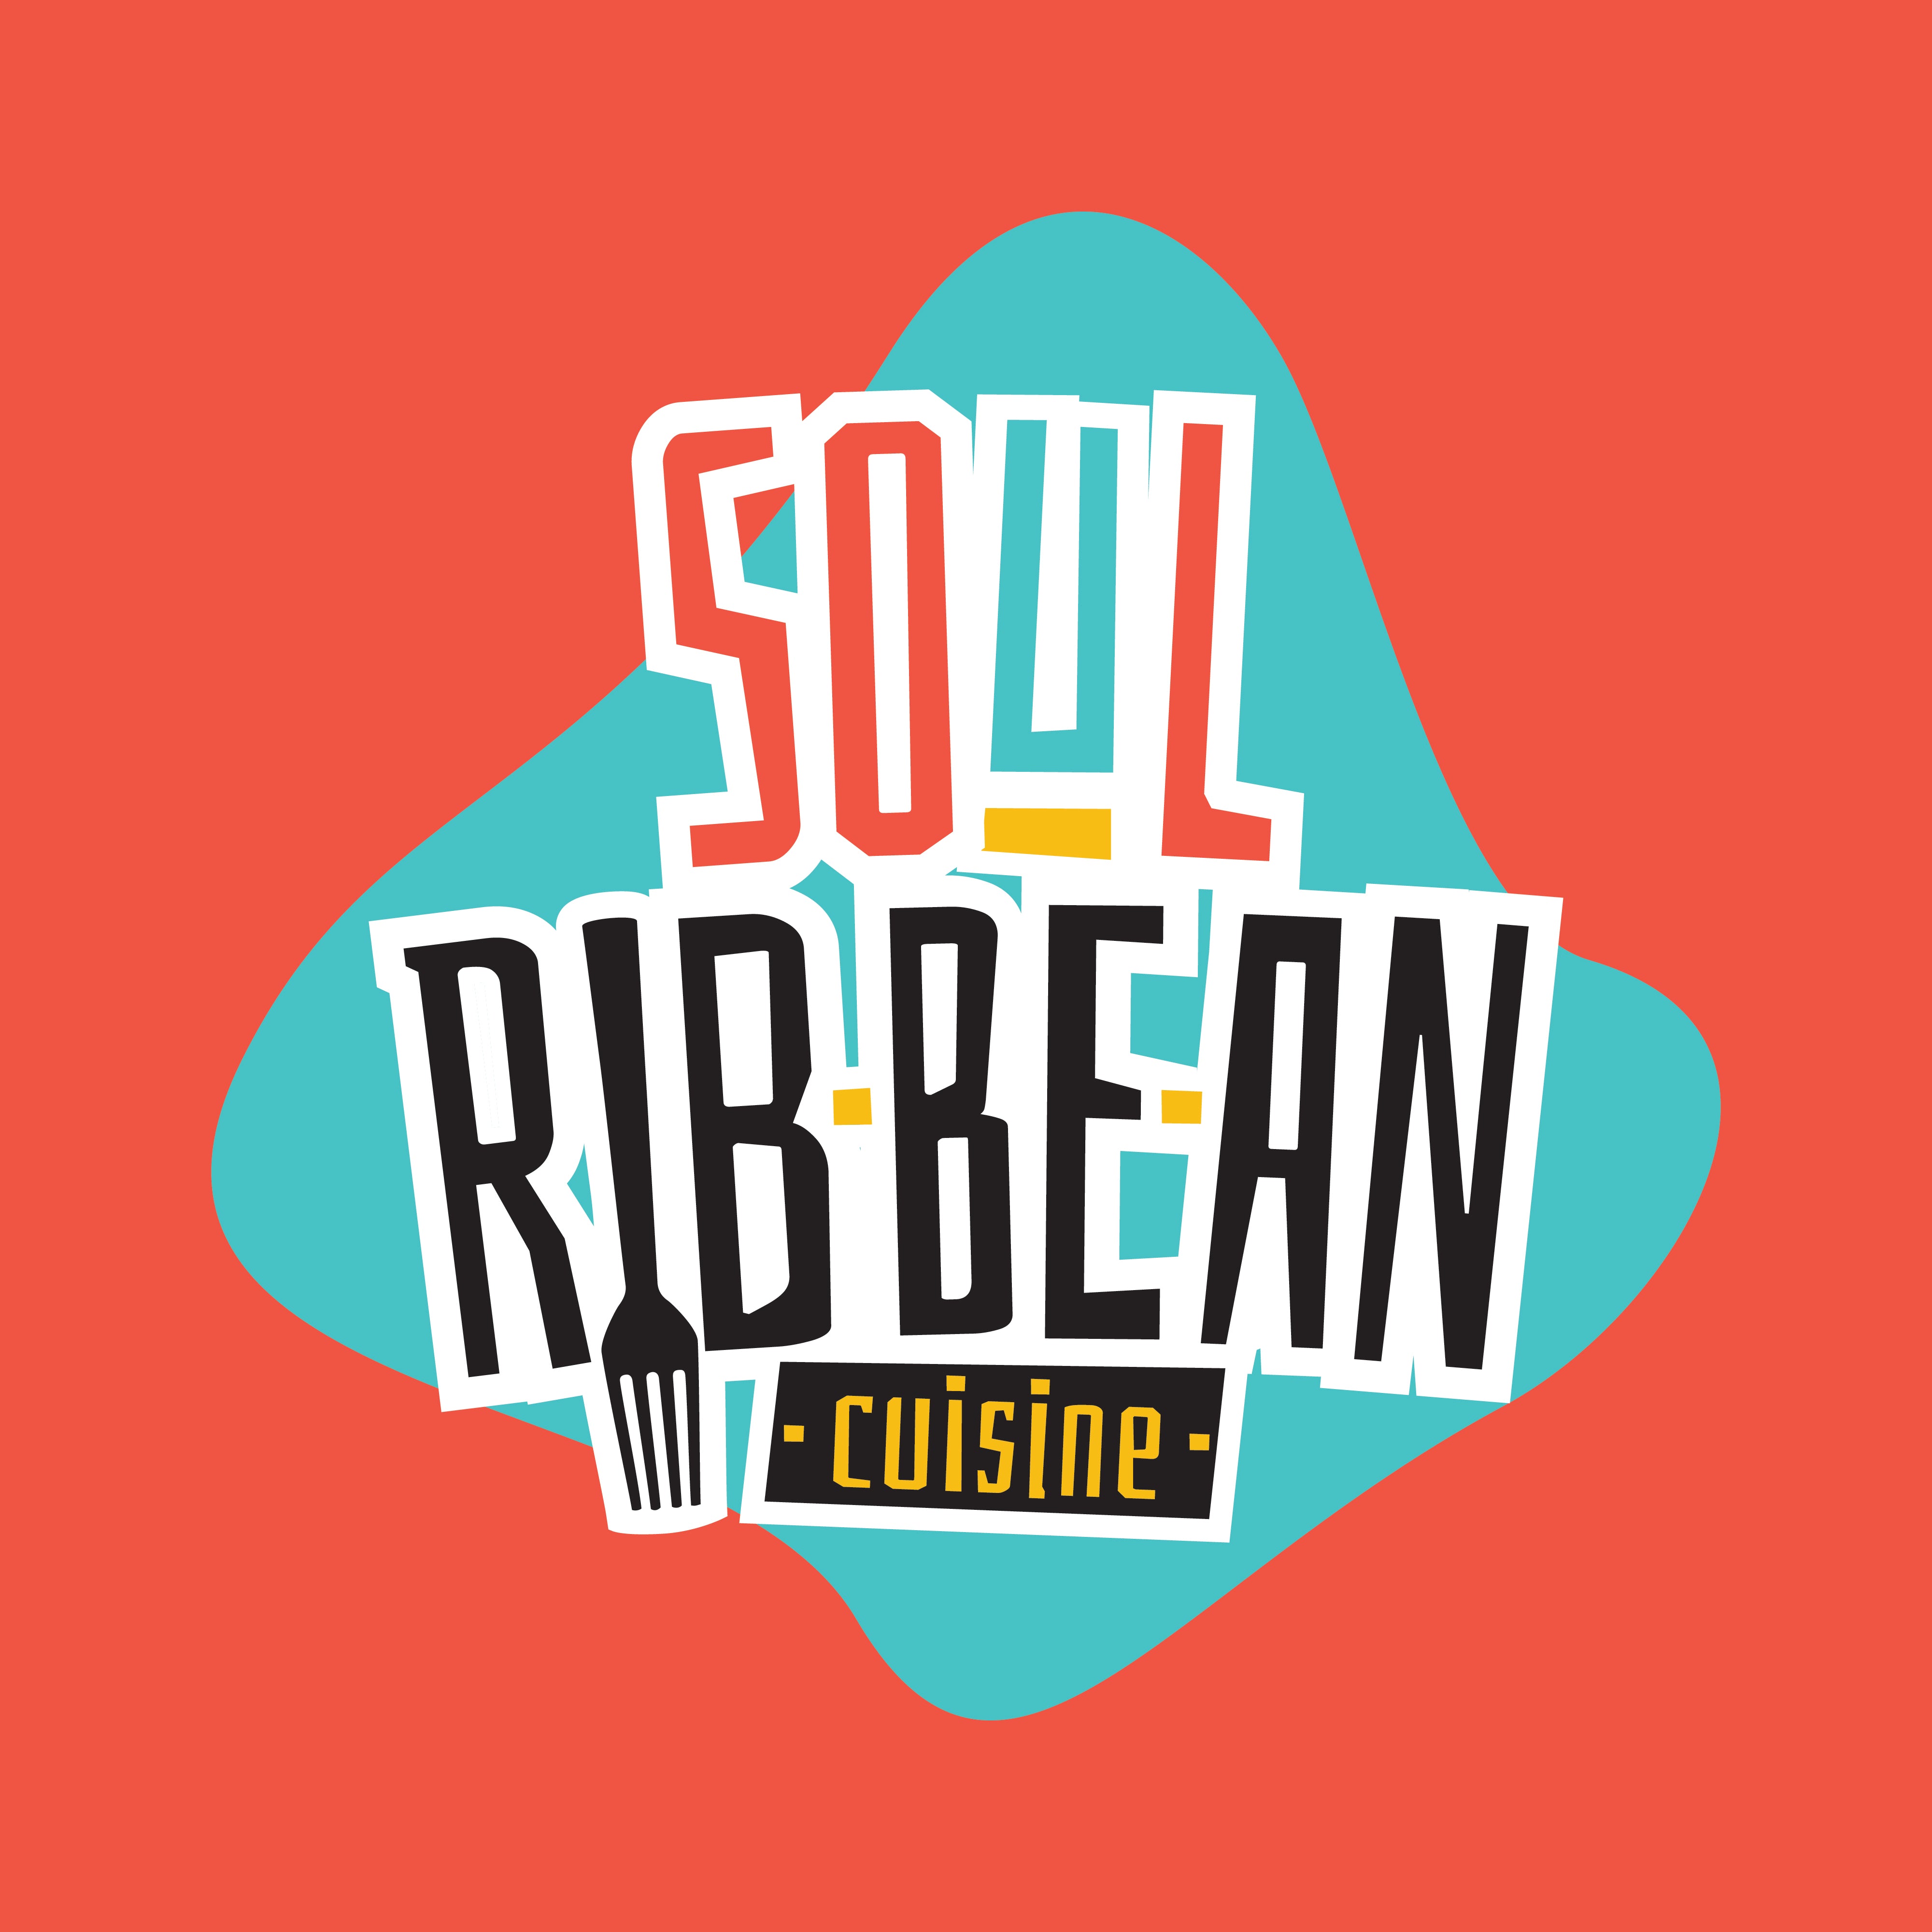 Classic Caribbean inspired soul food – SoulRibbean Cuisine